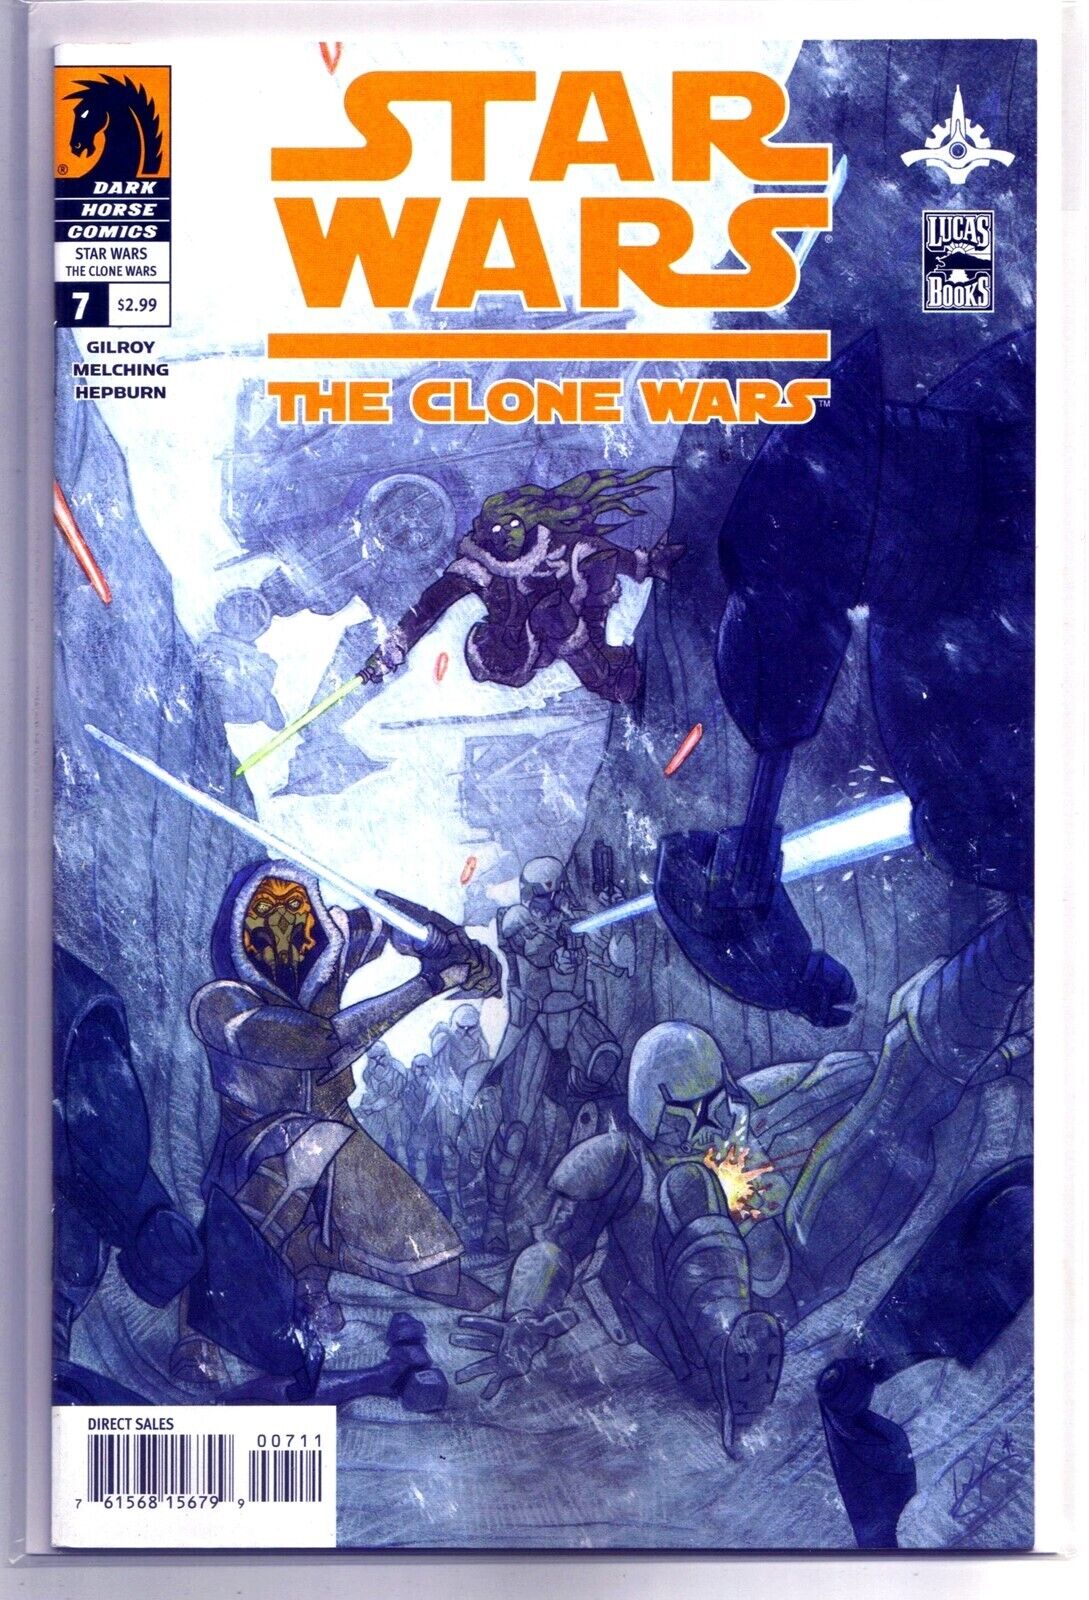 STAR WARS: The Clone Wars #7 Dark Horse Comic Book ~ FN